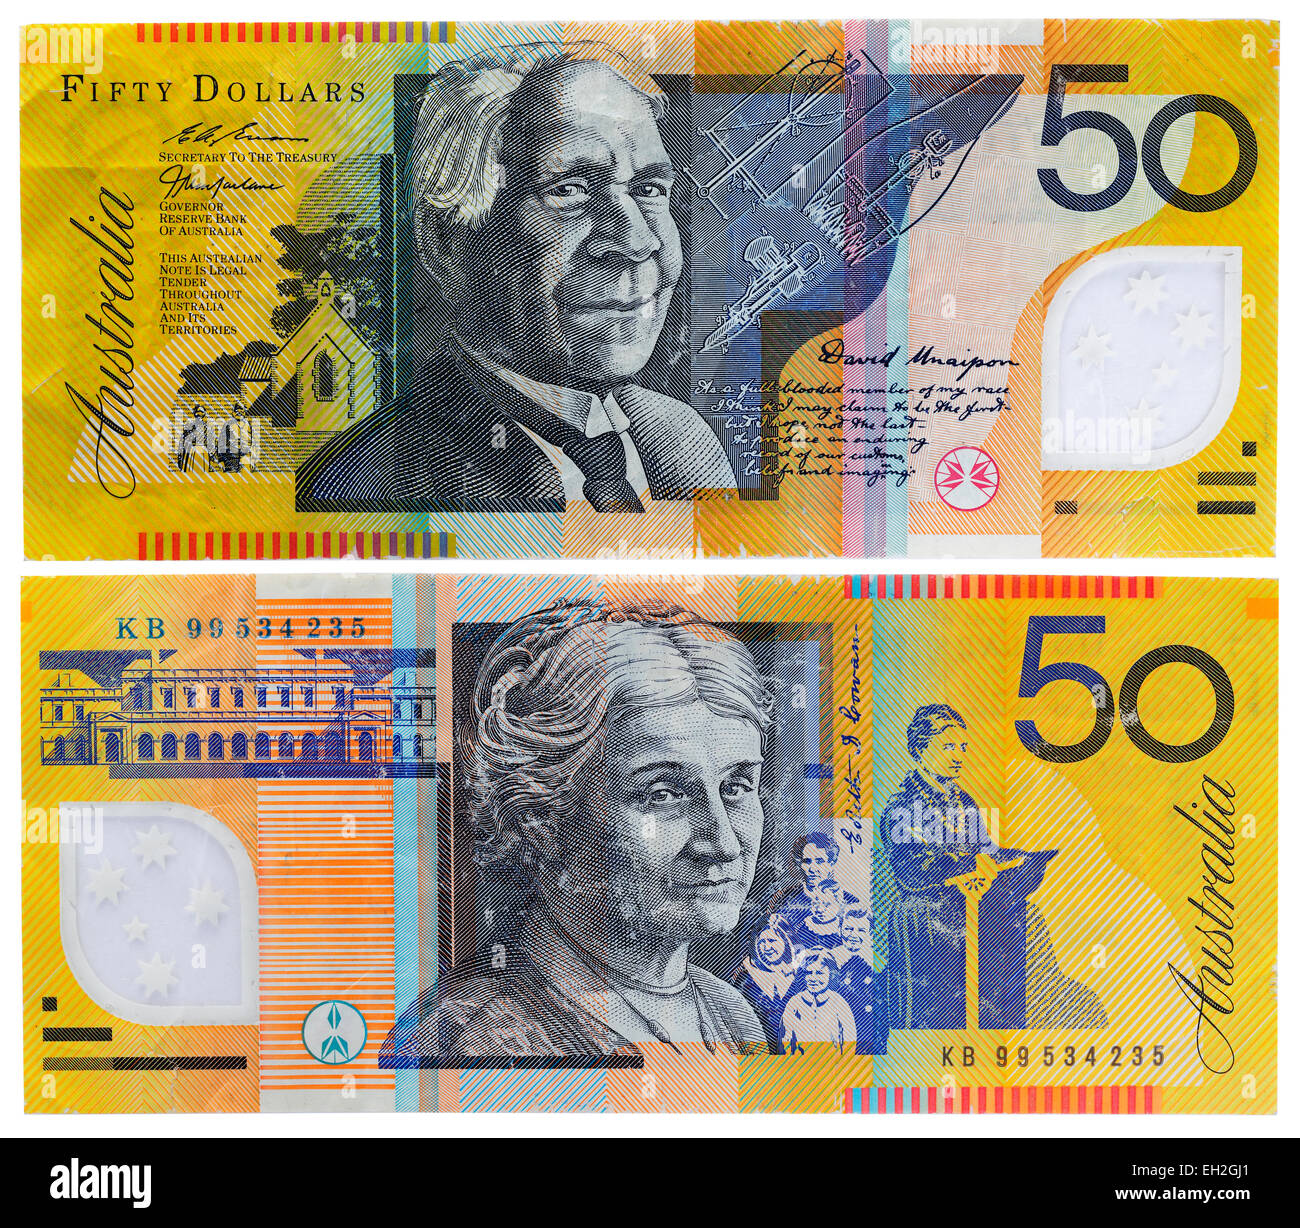 50 Australian Dollars (David Unaipon) - Exchange yours for cash